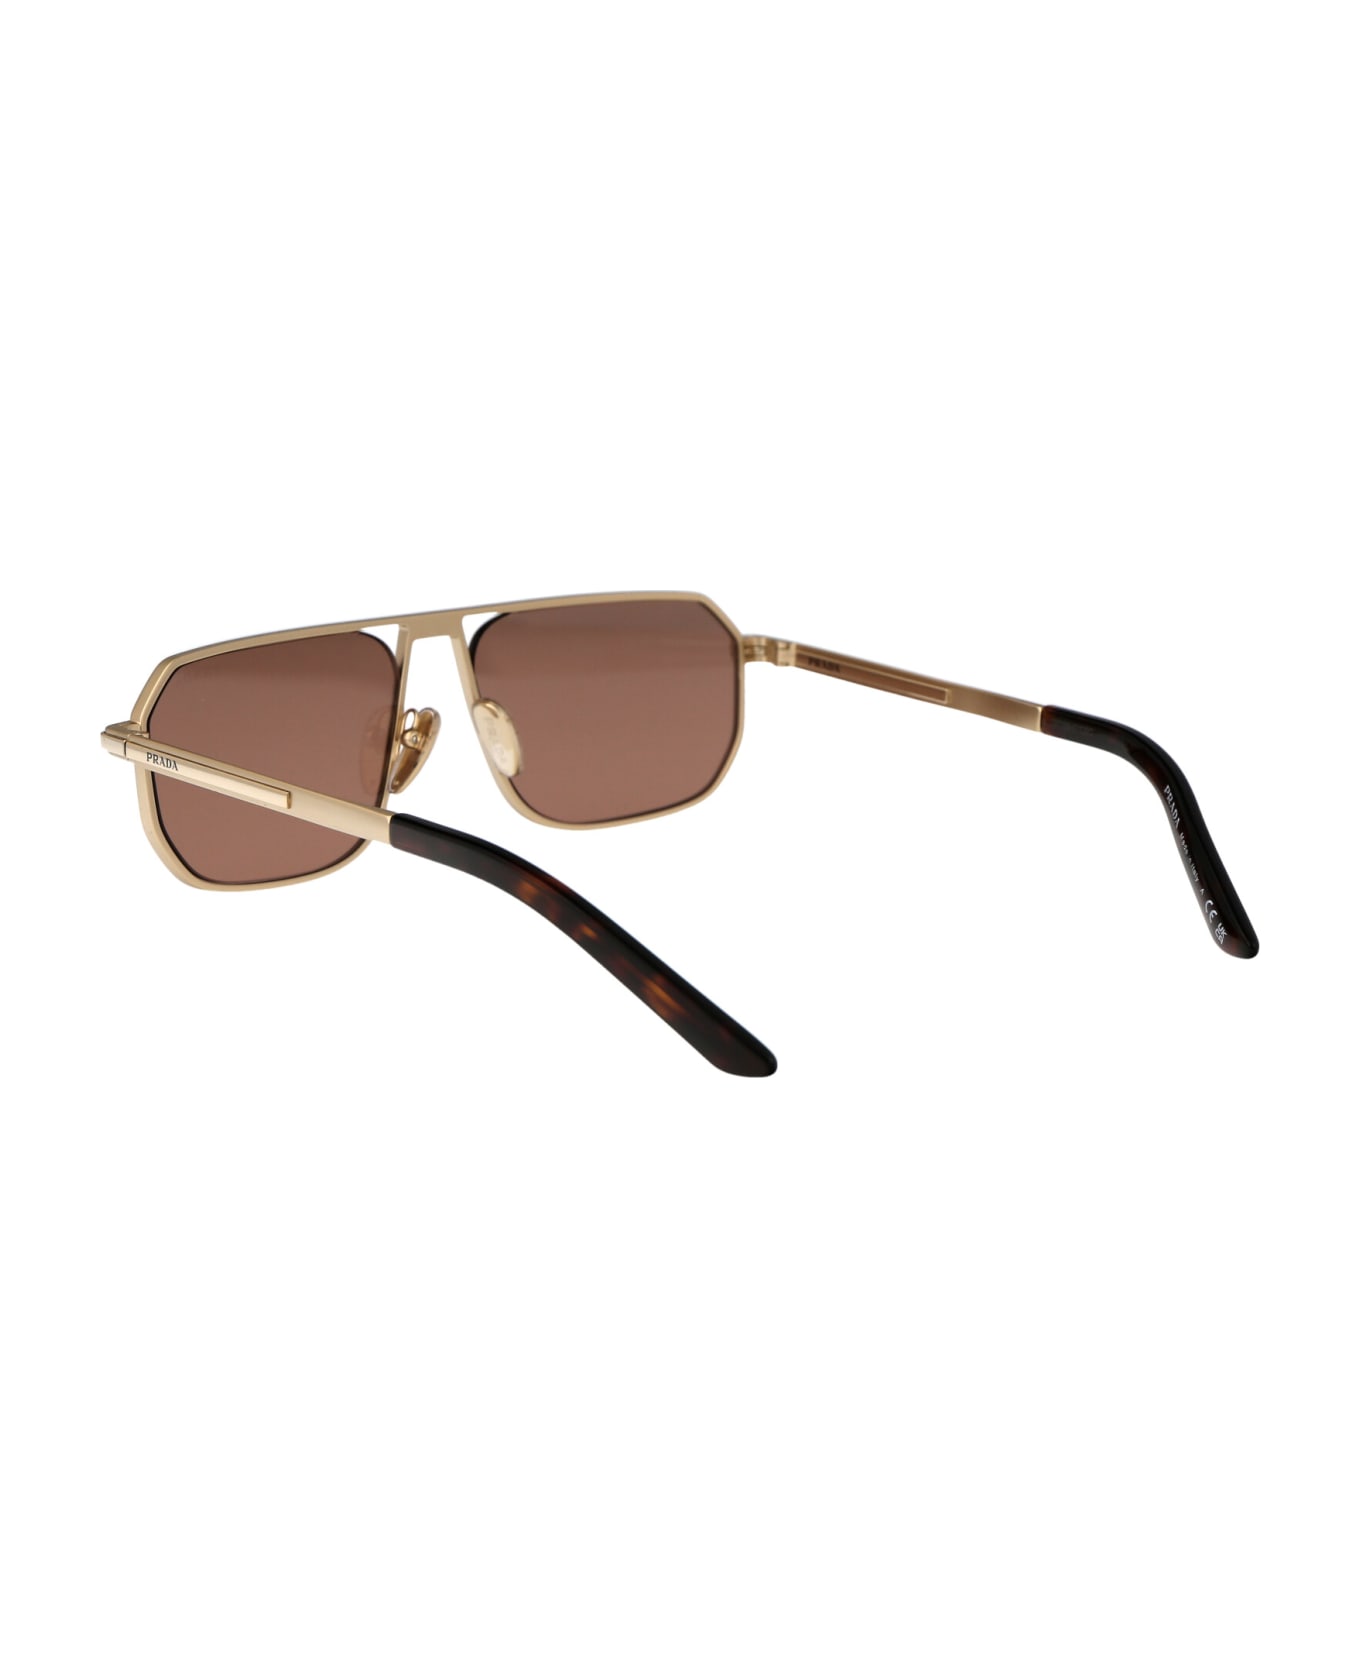 Prada Eyewear 0pr A53s Sunglasses - VAF10D Matte Pale Gold